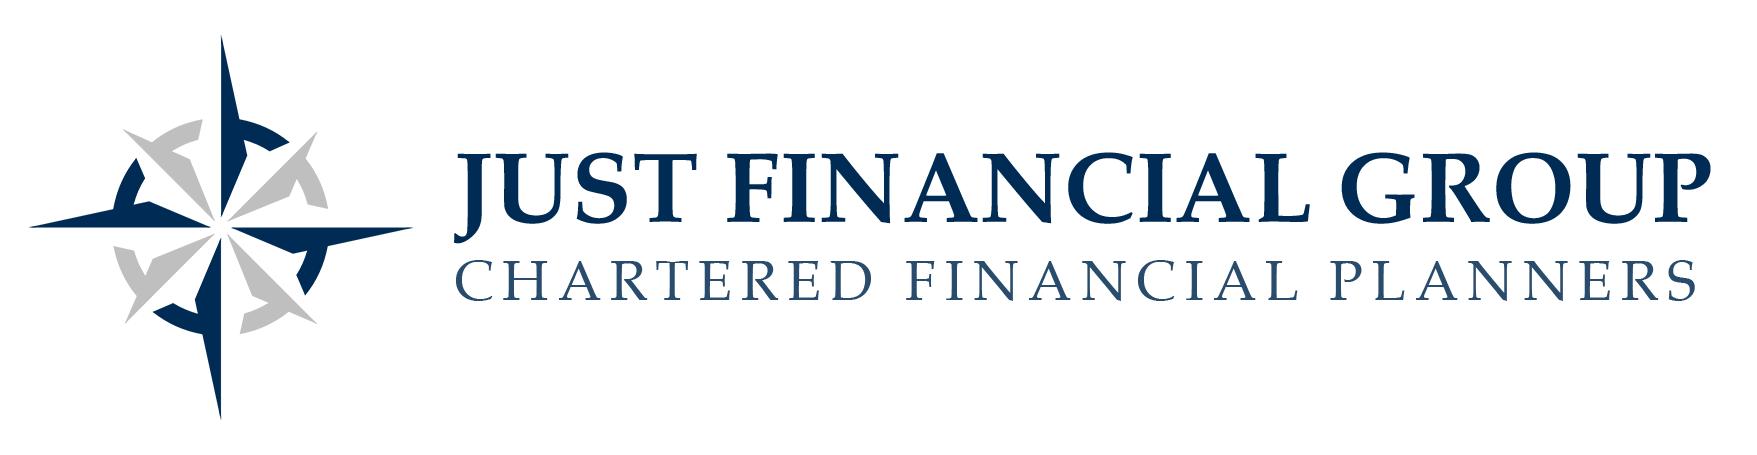 Just Financial Group Ltd